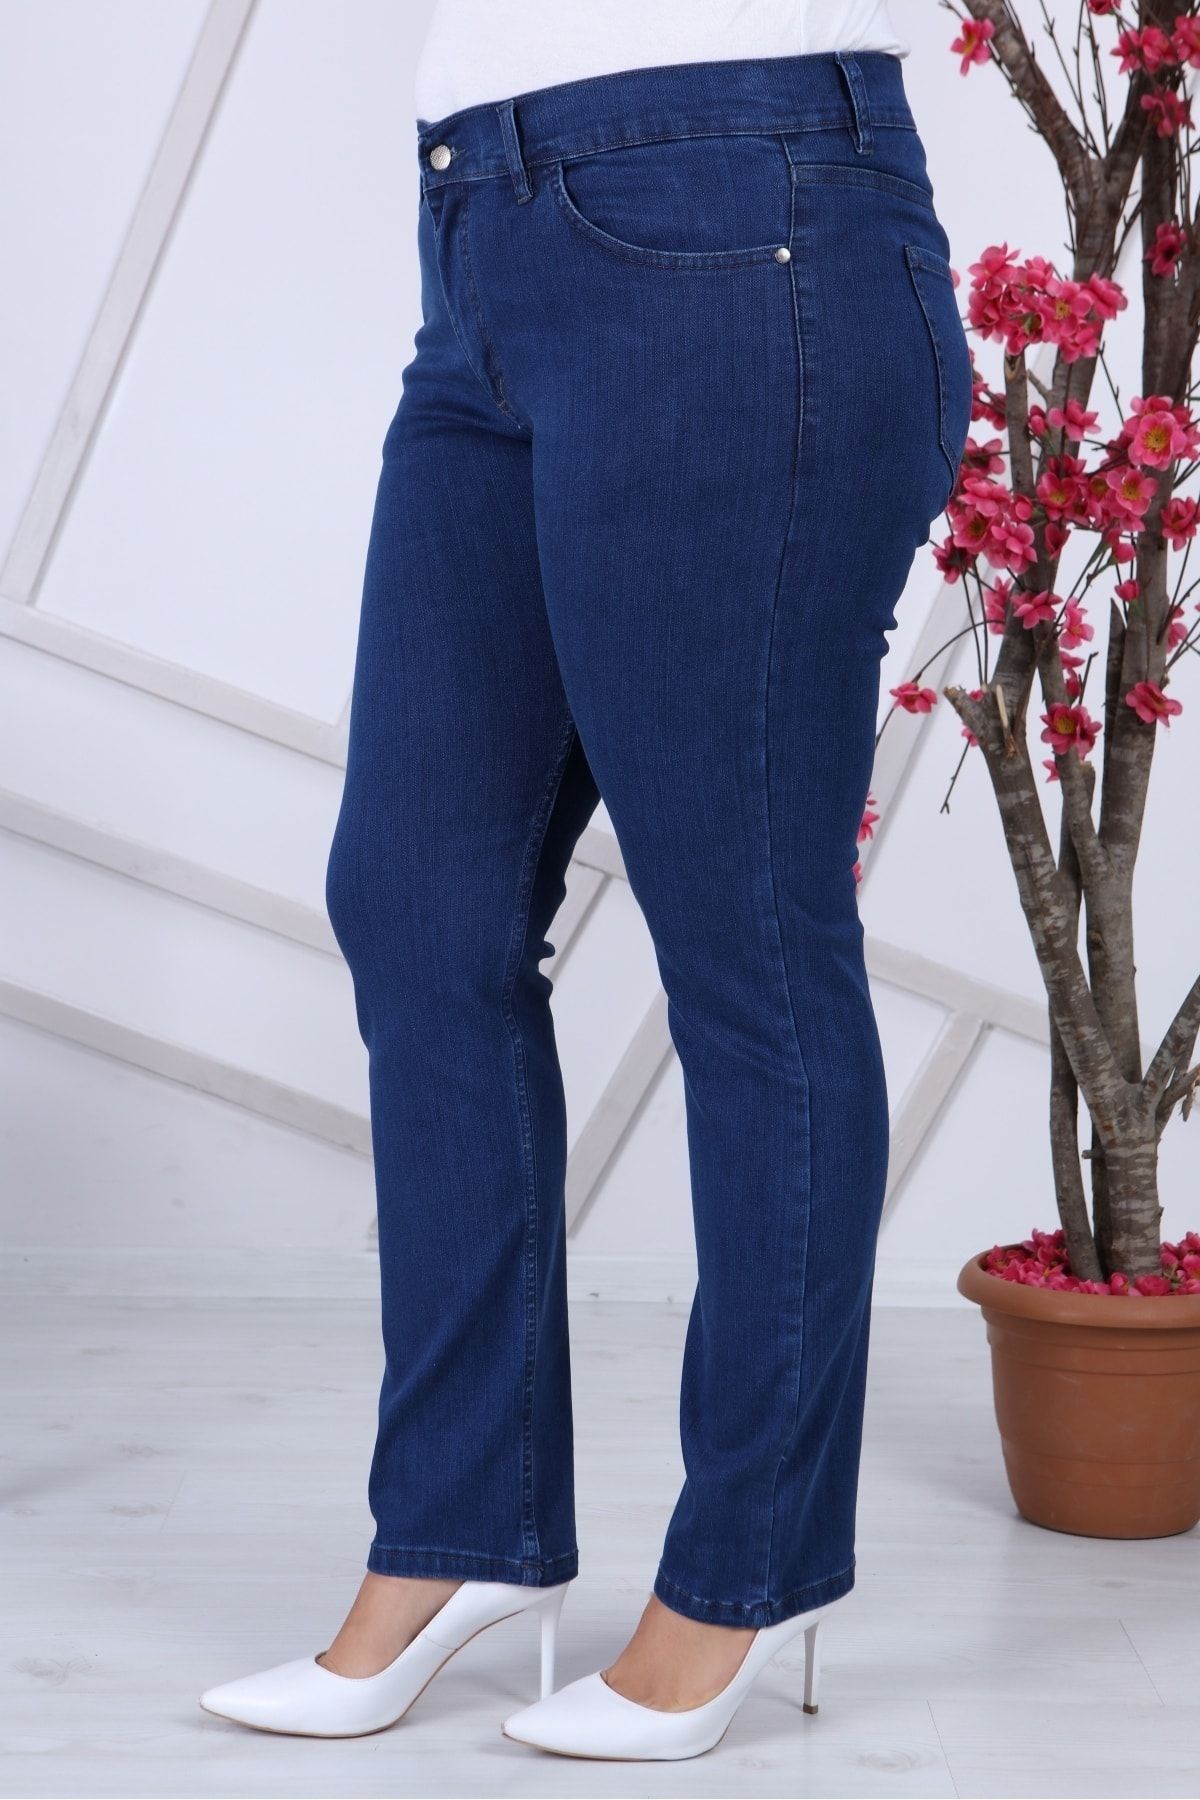 Gül Moda Mavi Yüksek Bel Boru Paça Kot Pantolon Jeans G035